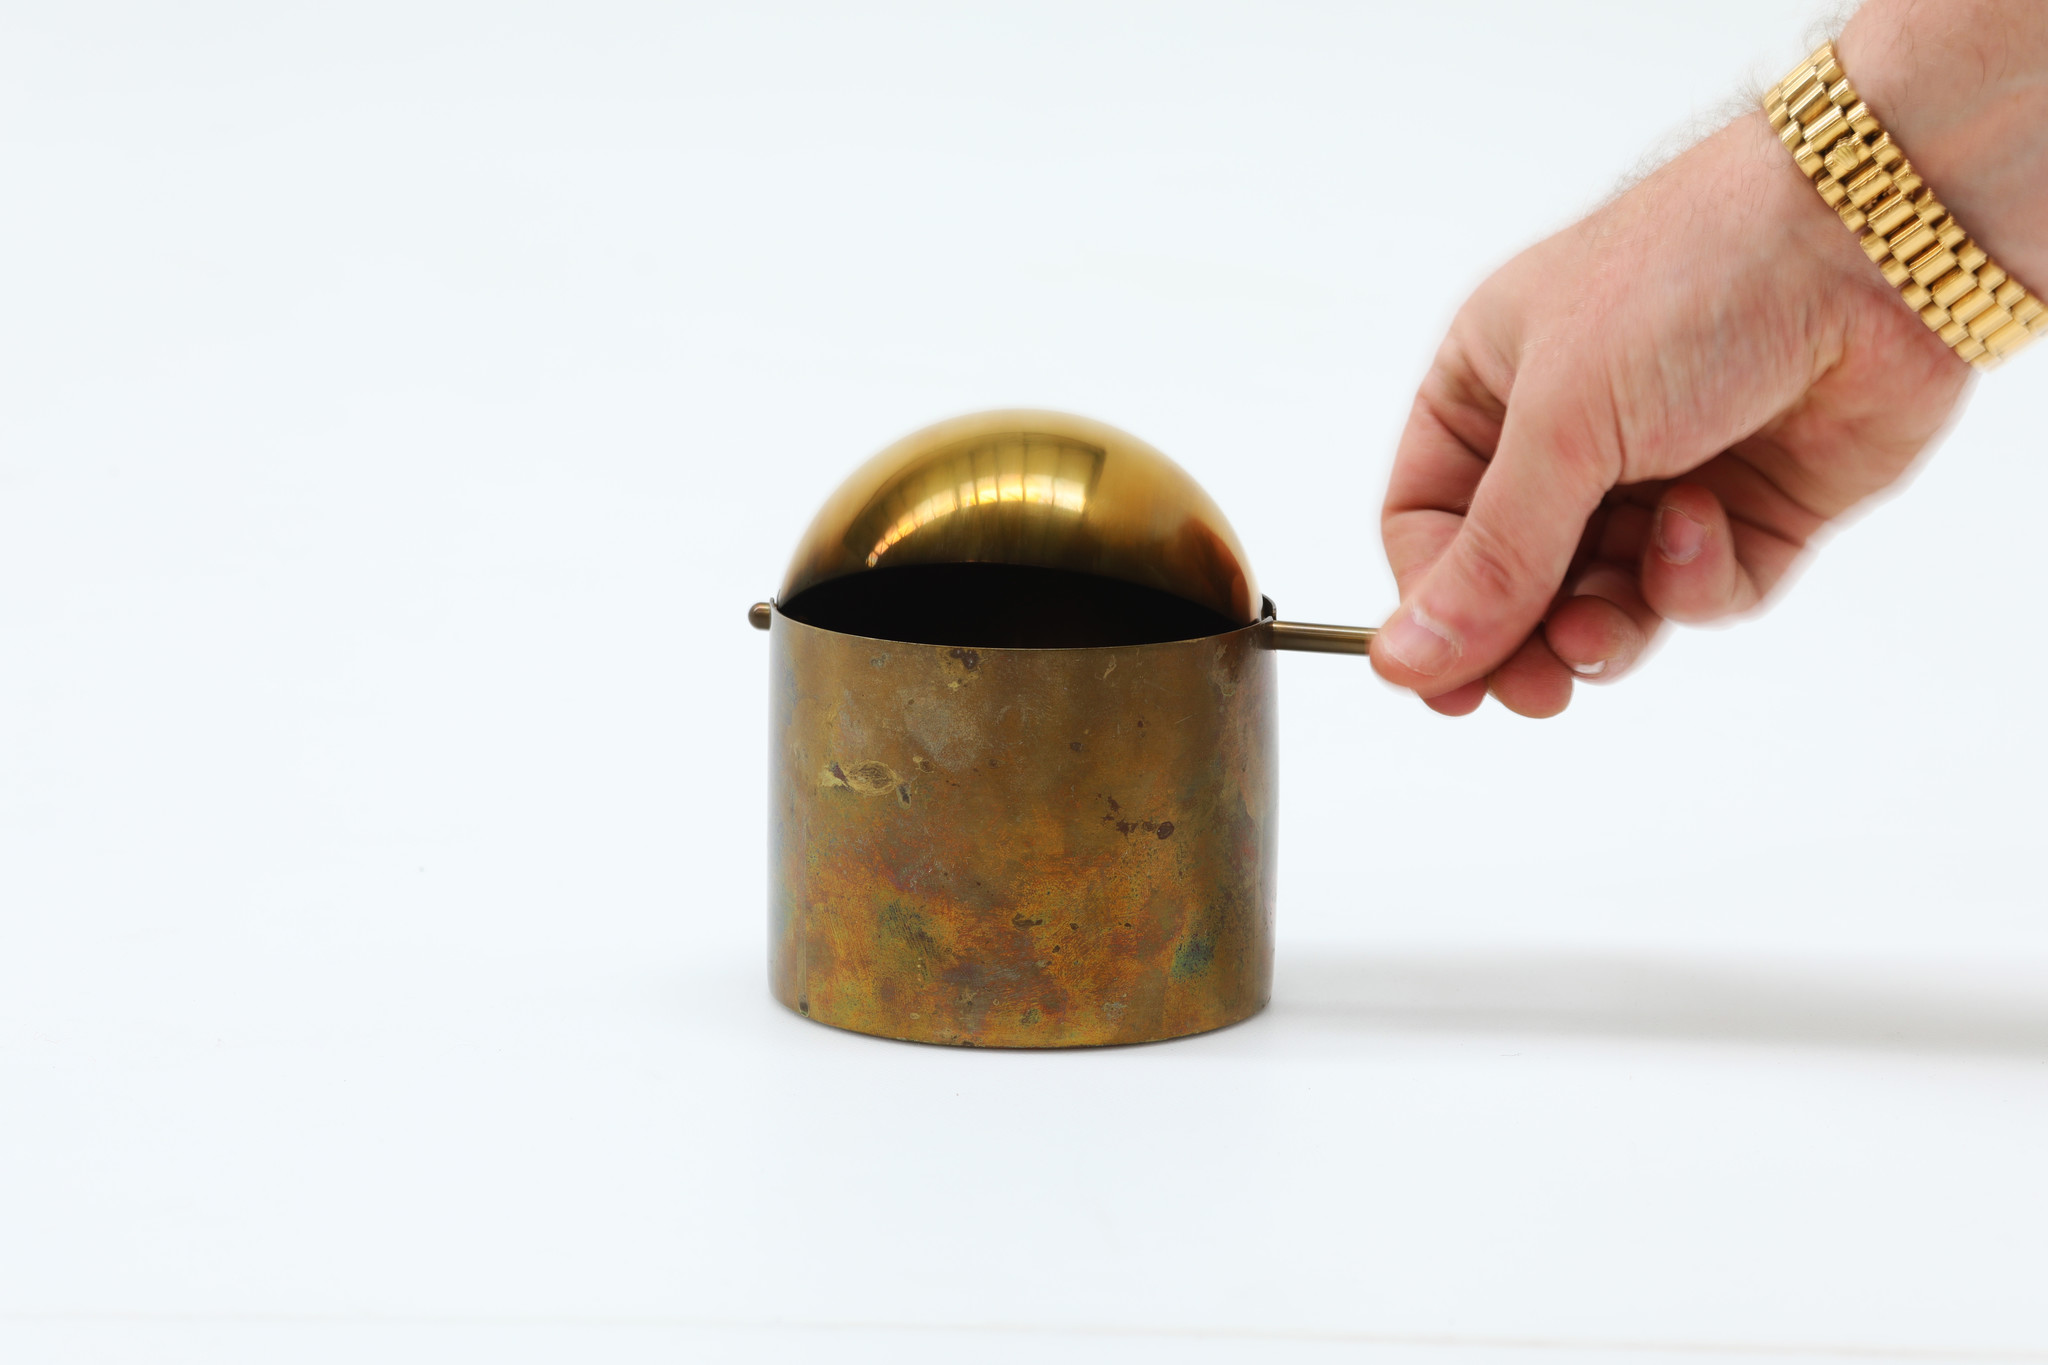 Rare copper Cylinda ashtray by Arne Jacobsen for Stelton